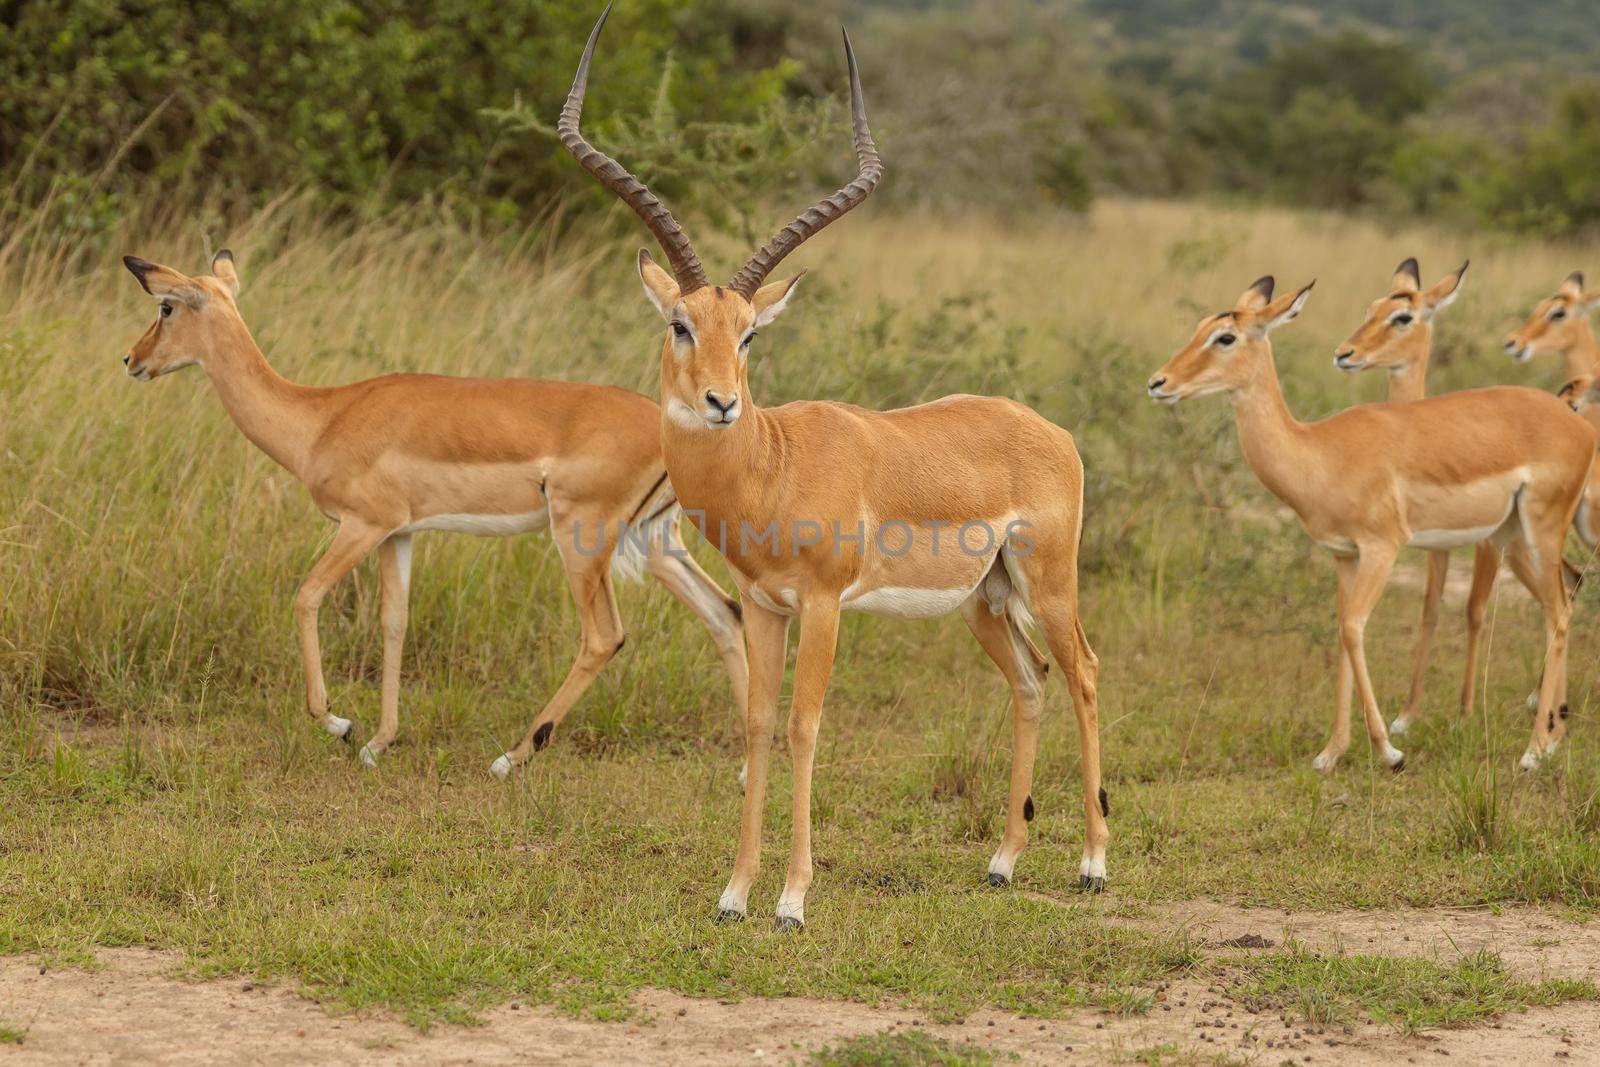 Many wild antelopes in national park in South Africa by Yaroslav_astakhov